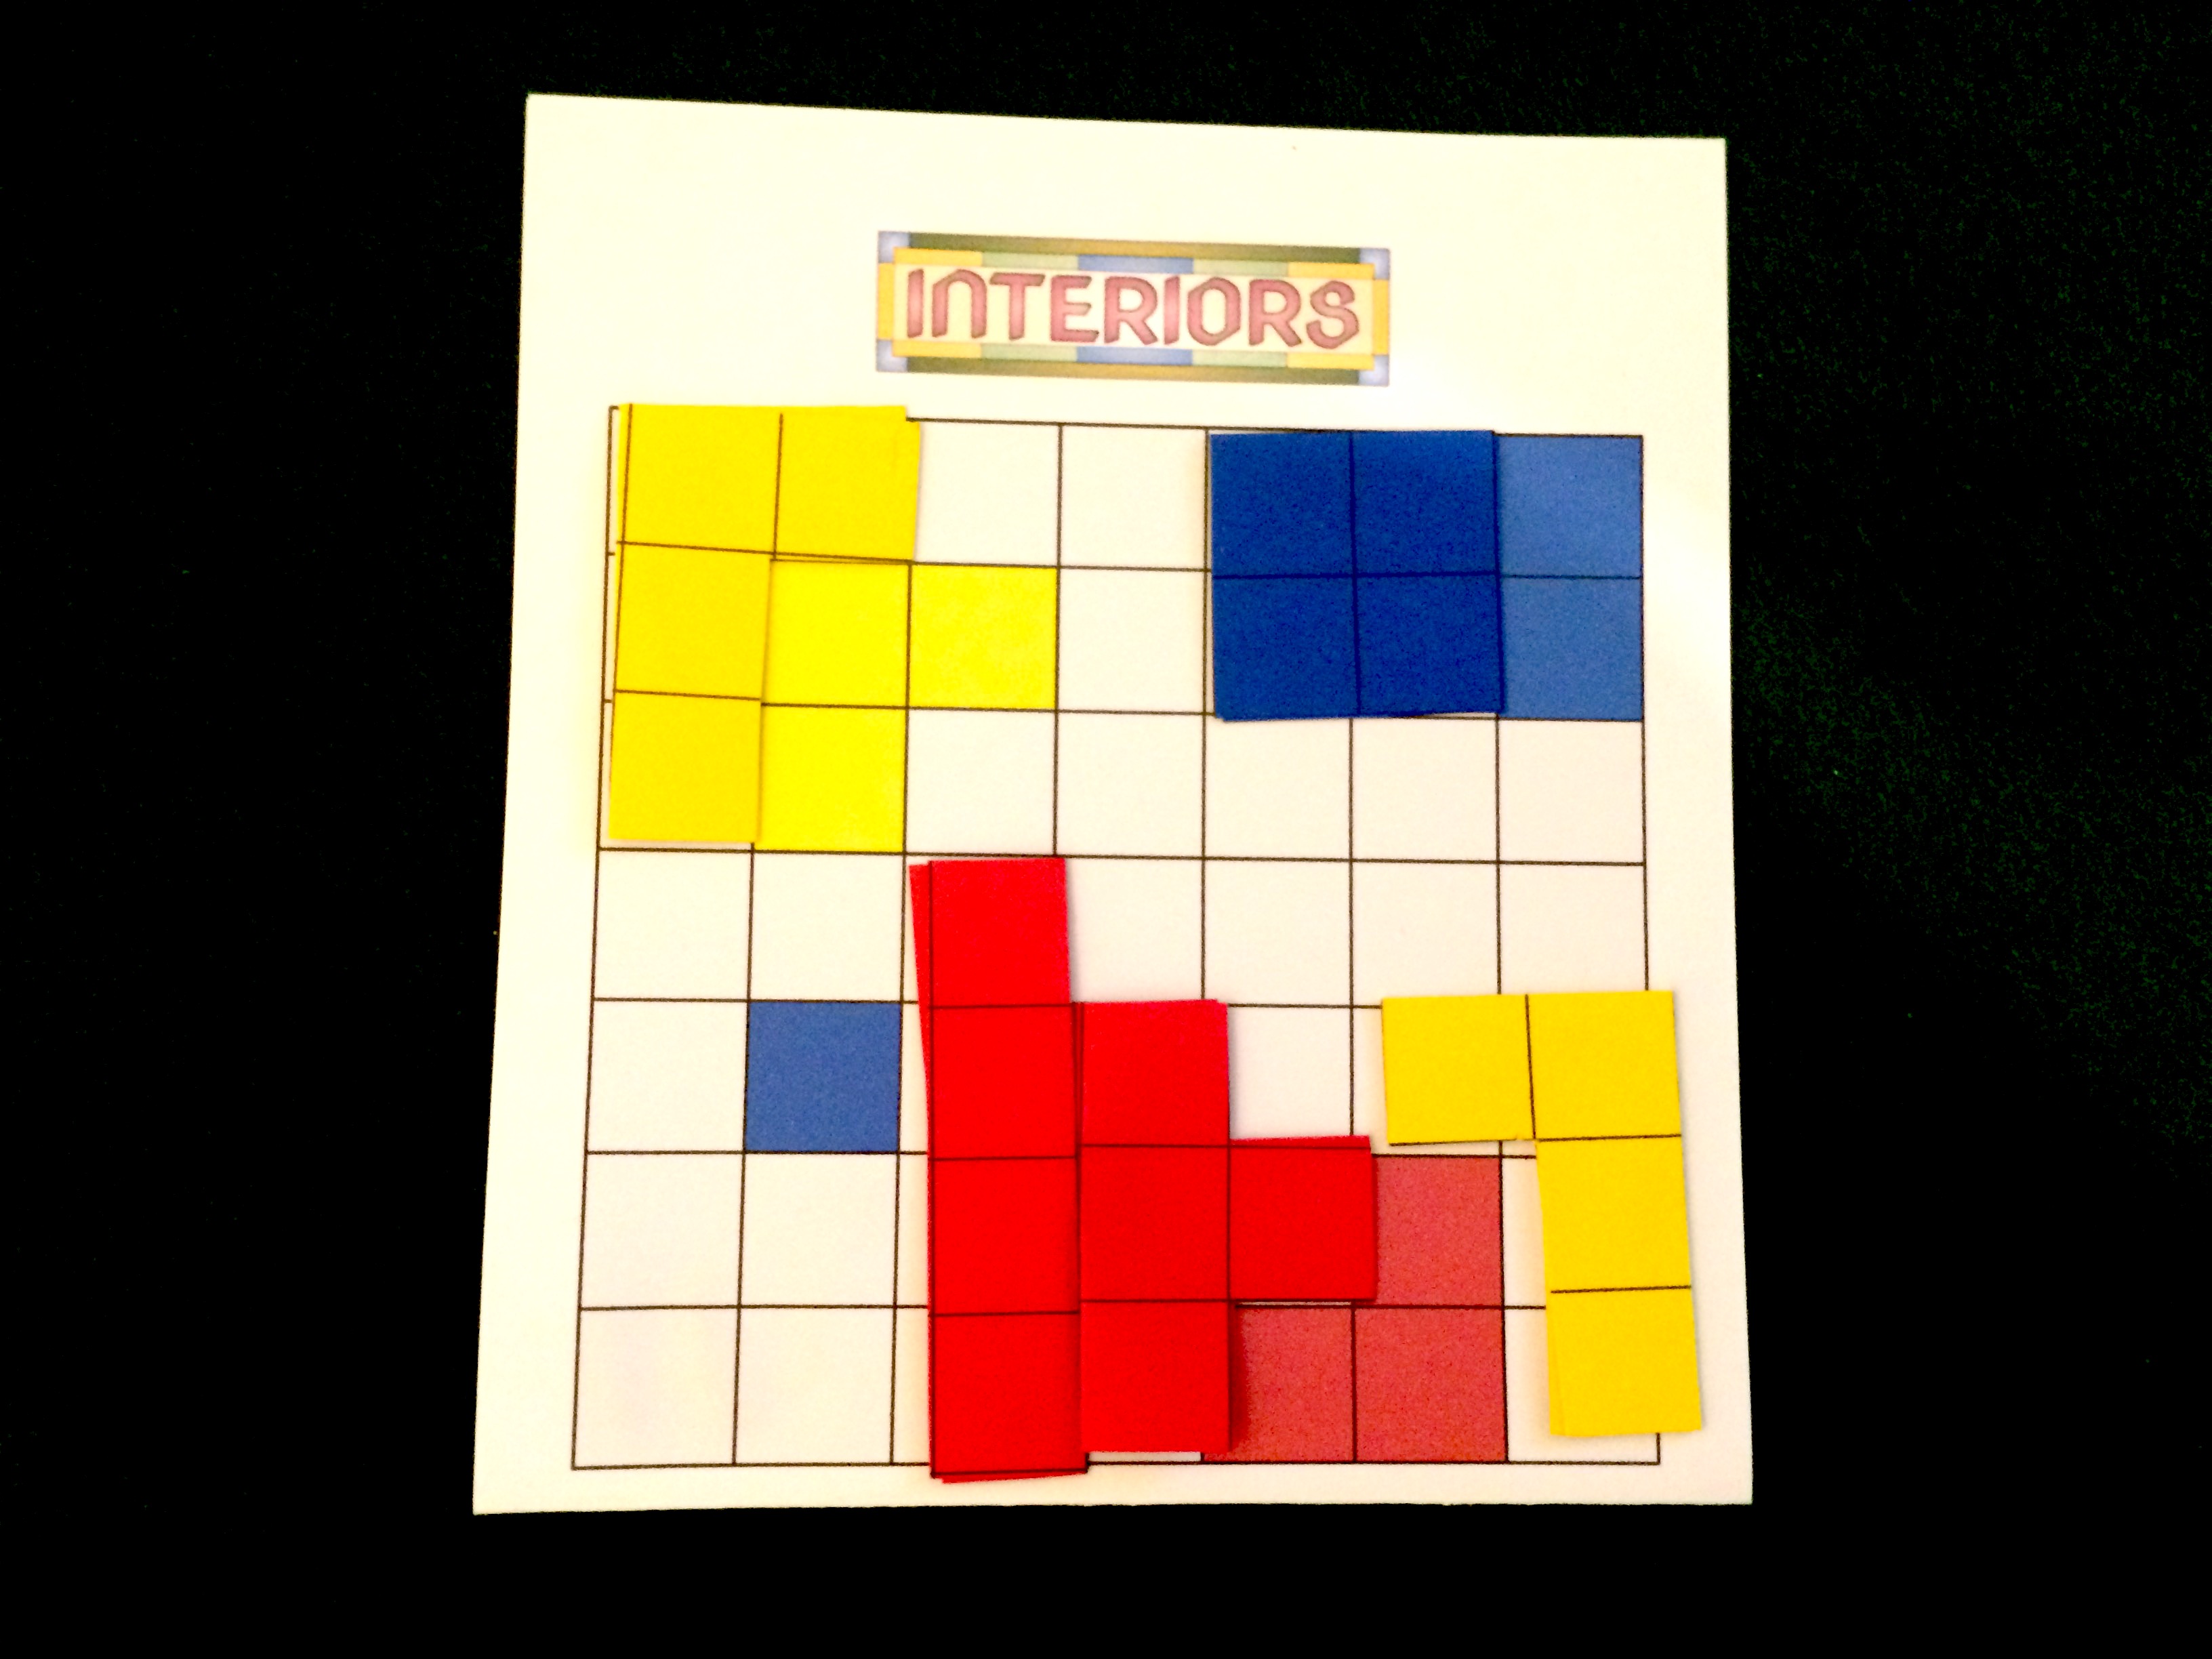 Interiors game tile